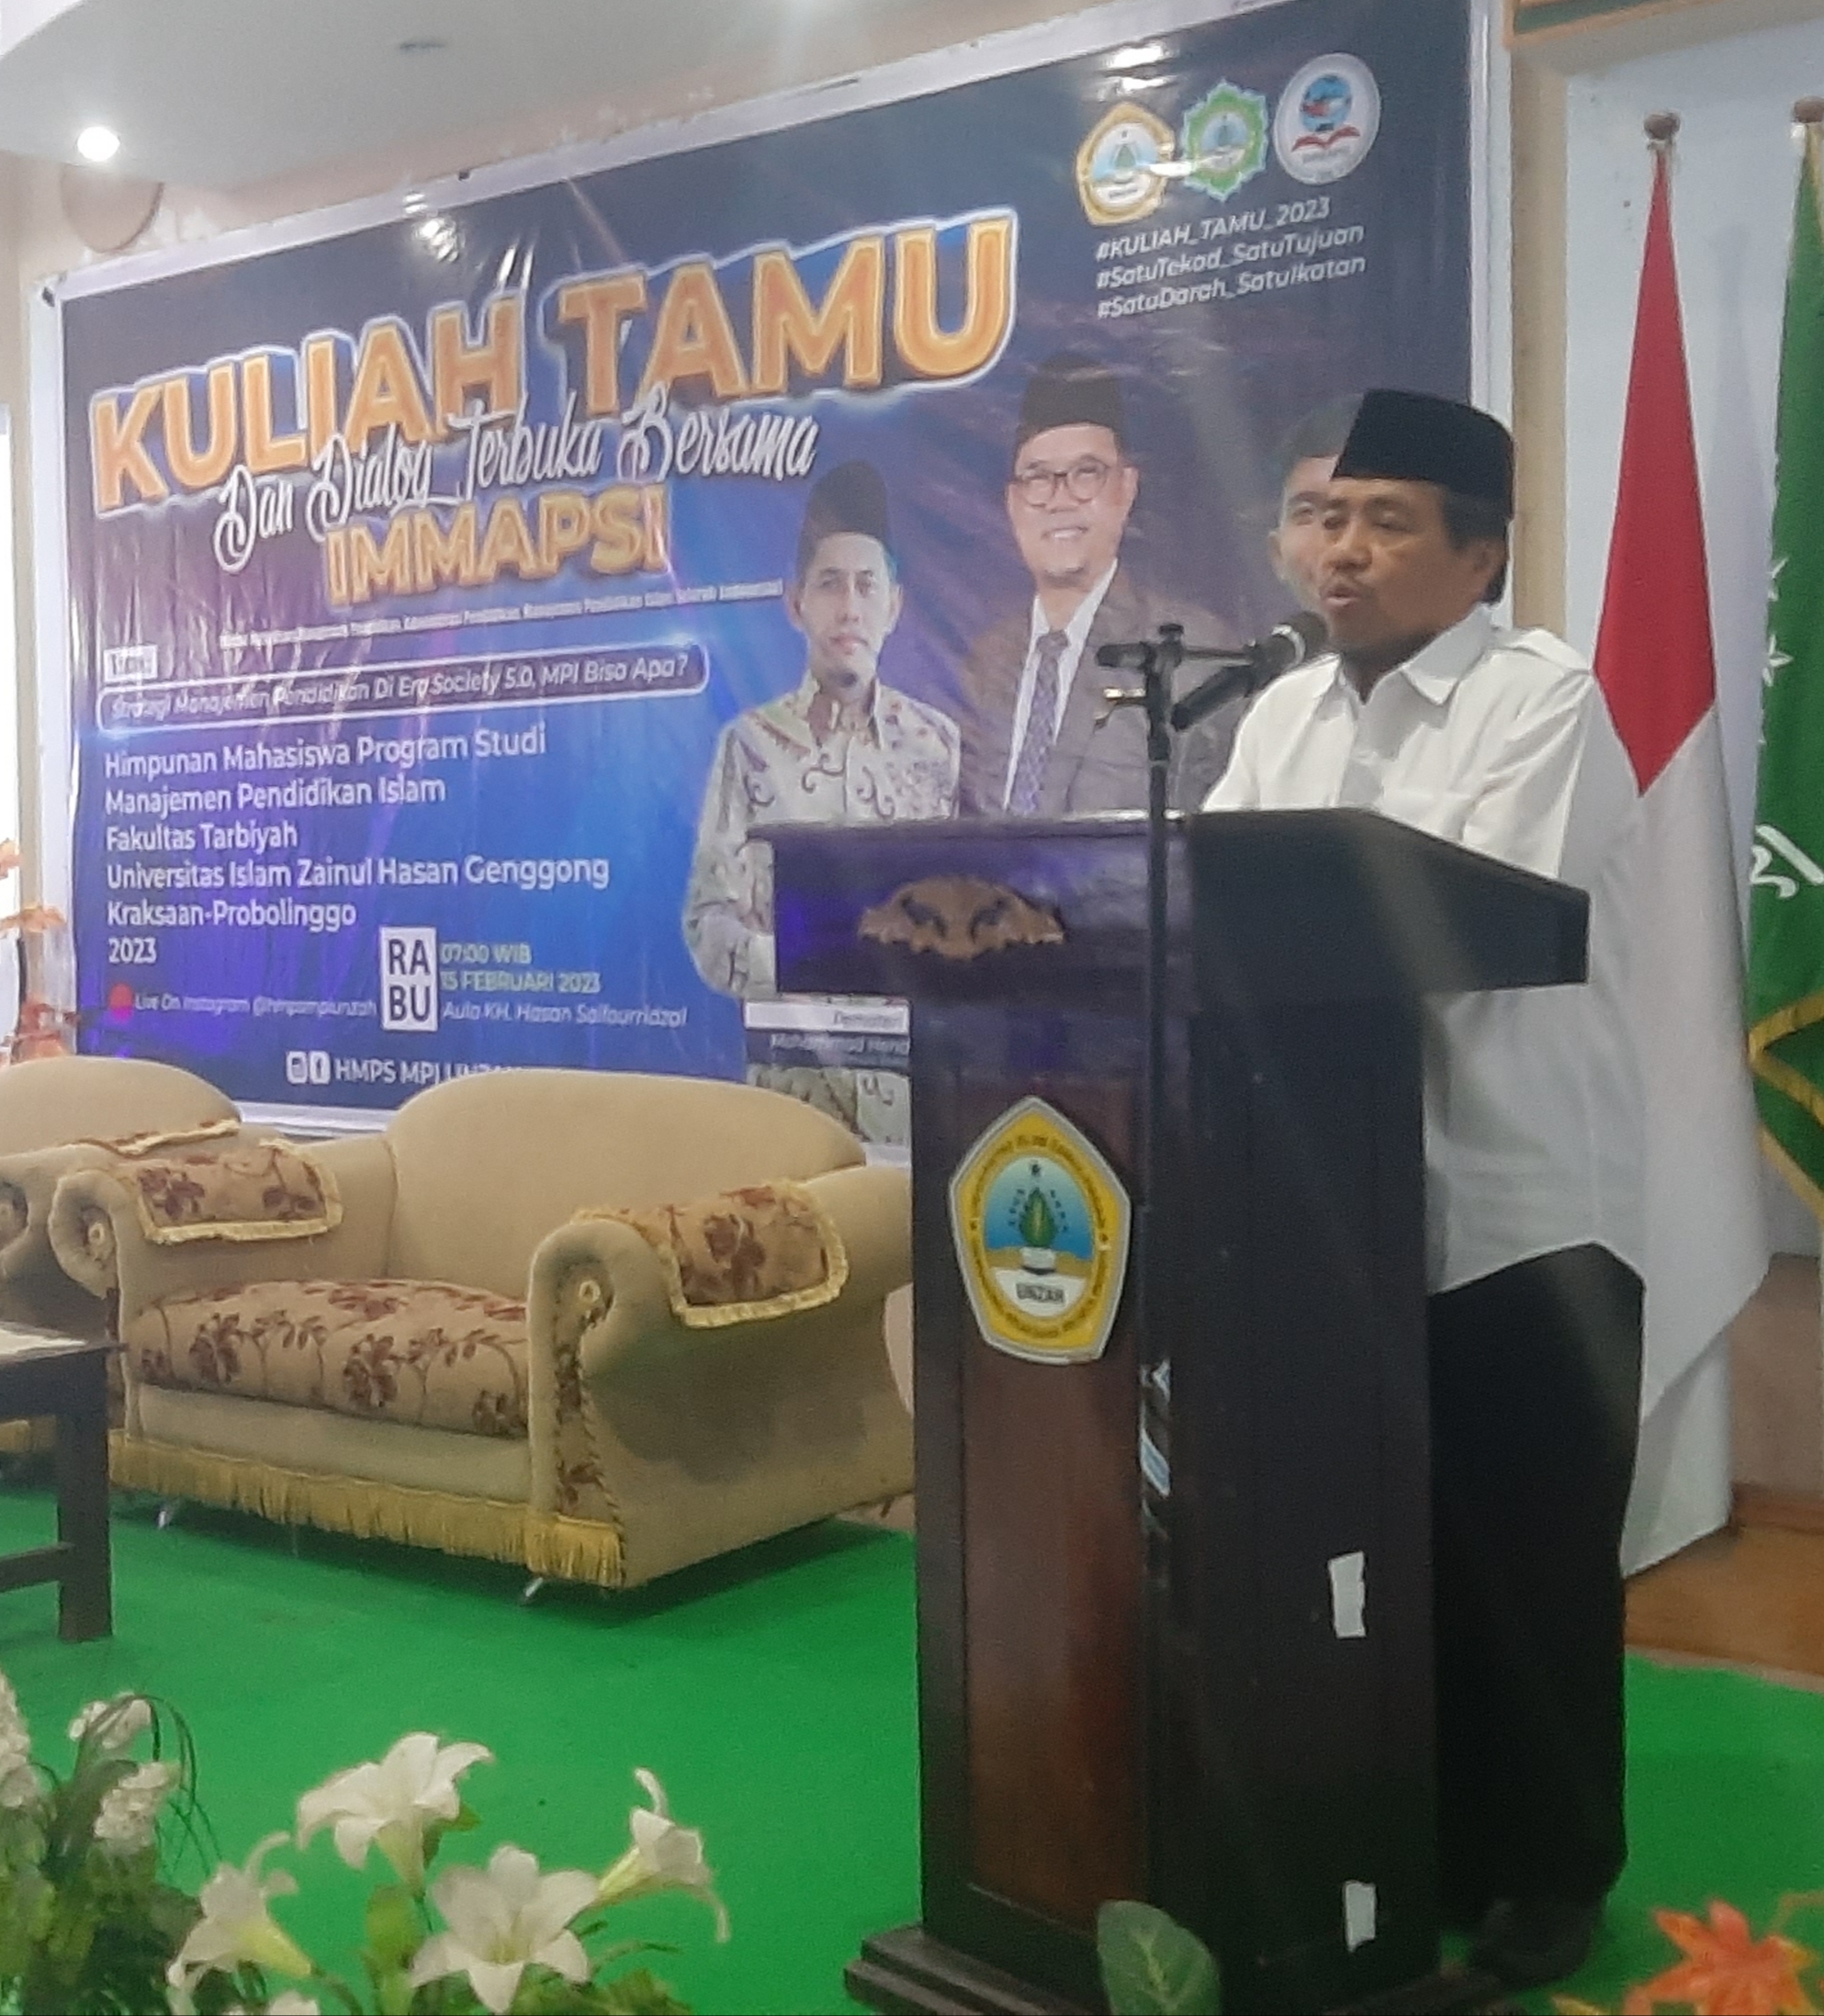 Gelar Kuliah Tamu, Prodi MPI UNZAH Gelar Dialog Terbuka bersama IMMAPSI Seluruh Indonesia